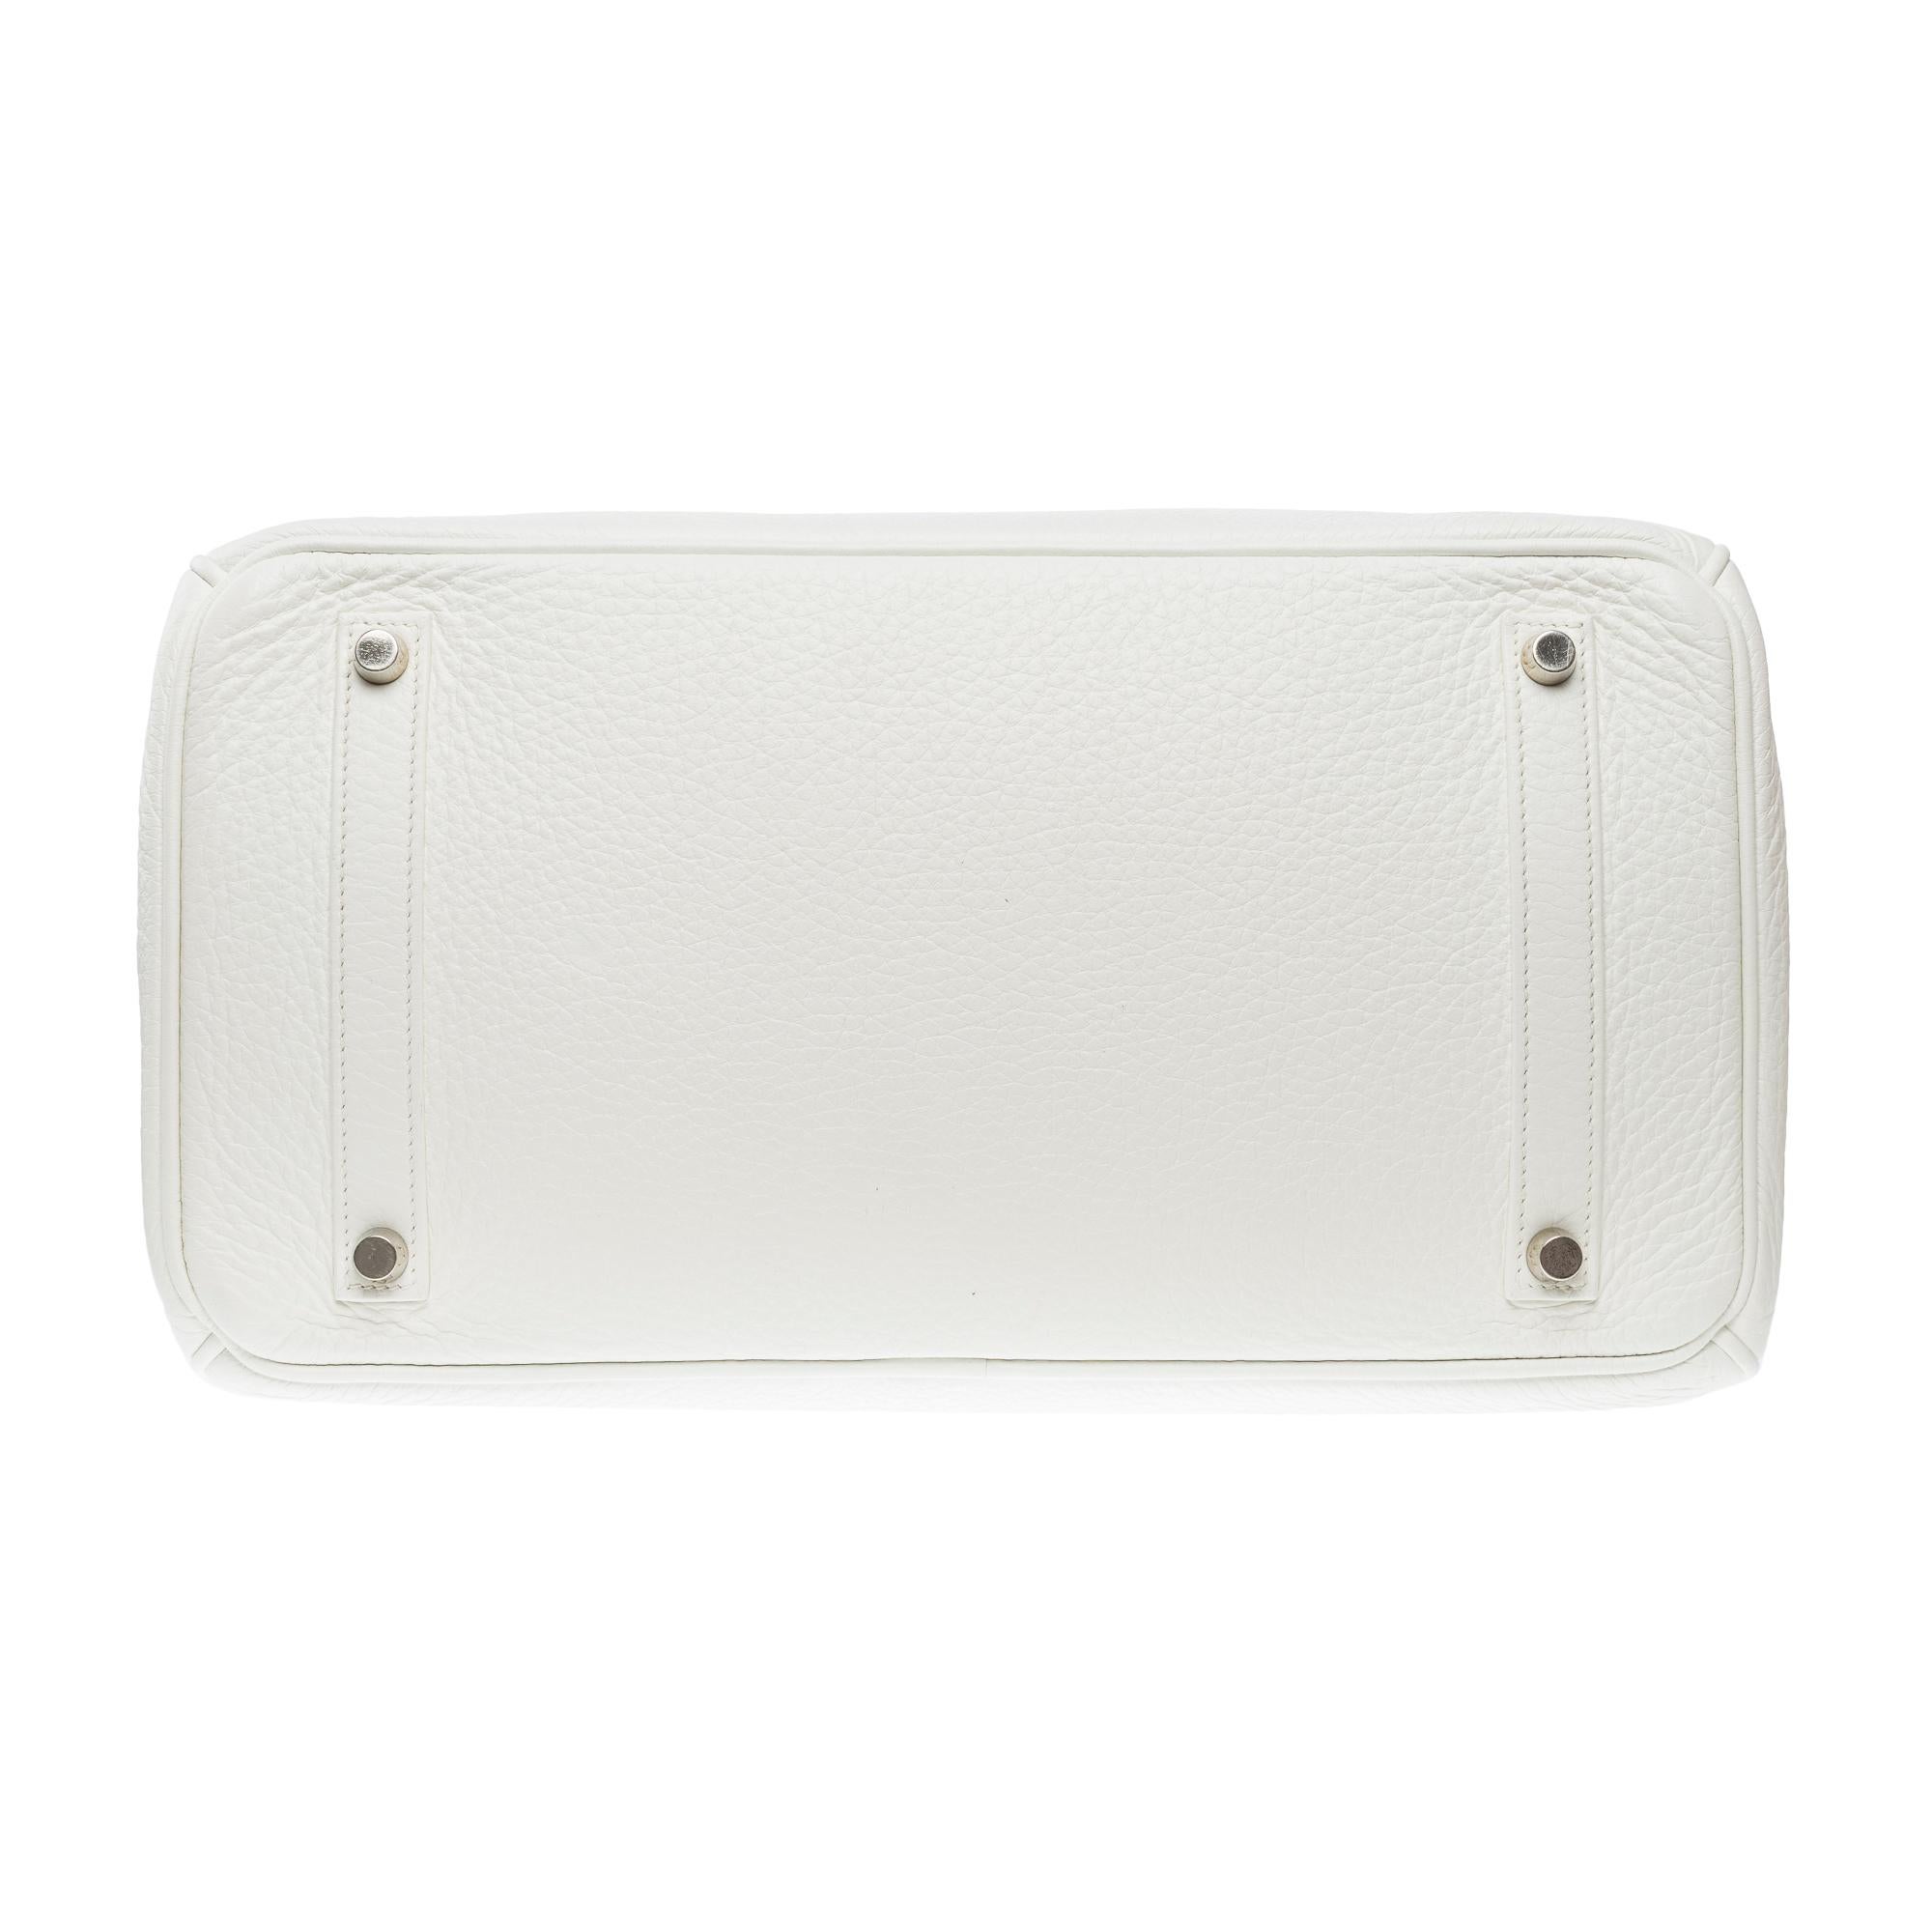 Stunning Hermès Birkin 35 handbag in White Taurillon Clemence leather, SHW 7